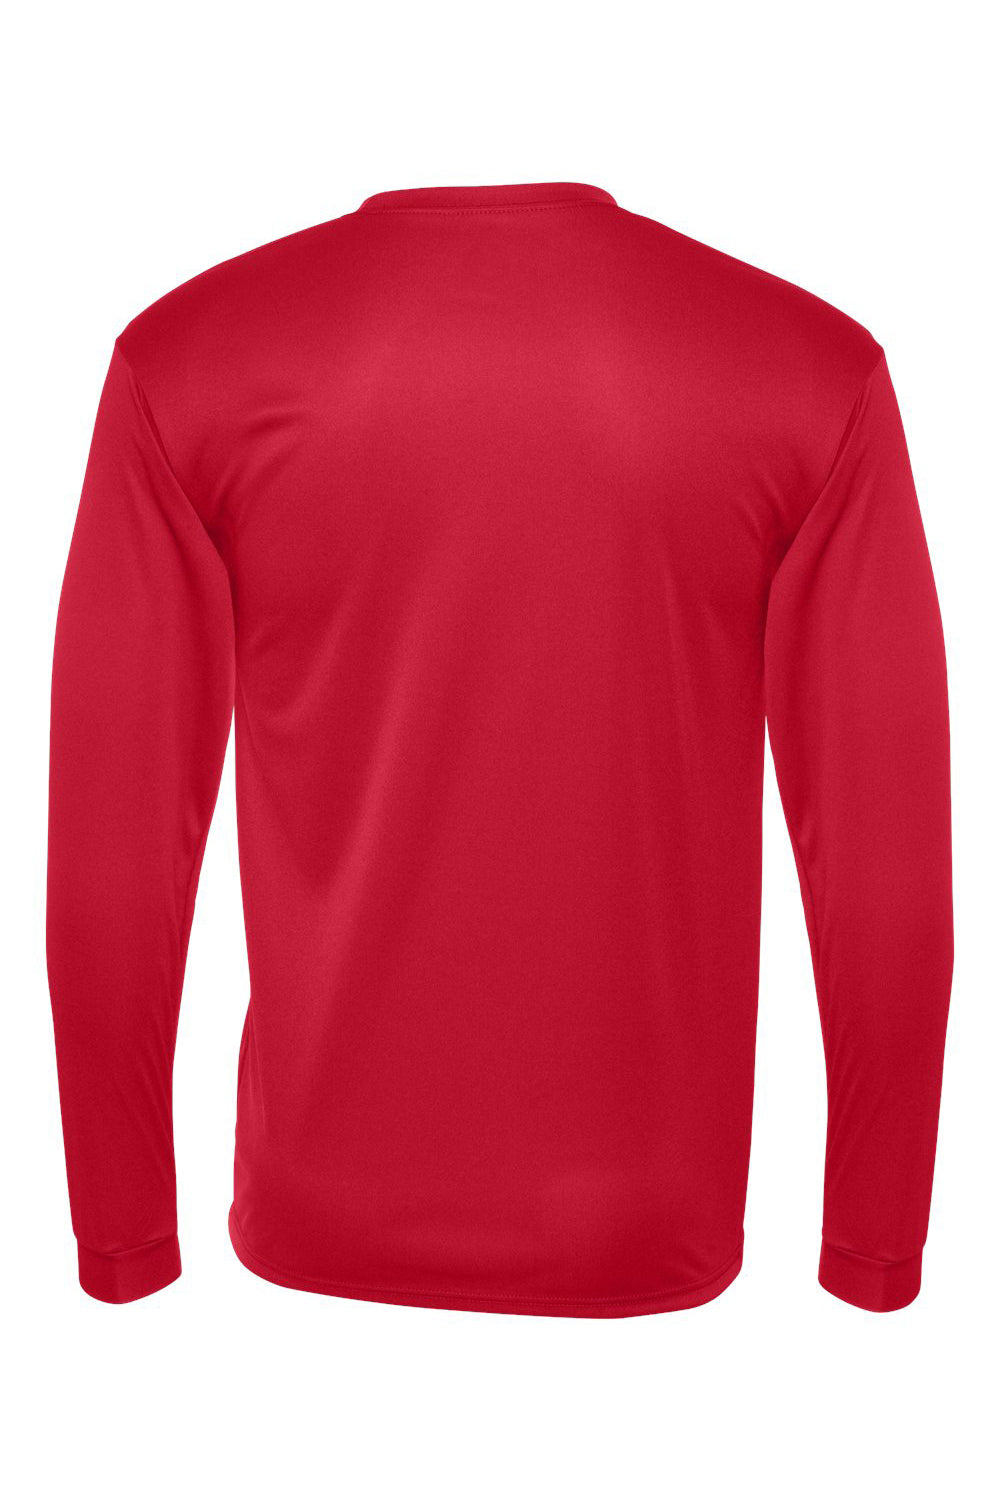 C2 Sport 5104 Mens Performance Moisture Wicking Long Sleeve Crewneck T-Shirt Red Flat Back